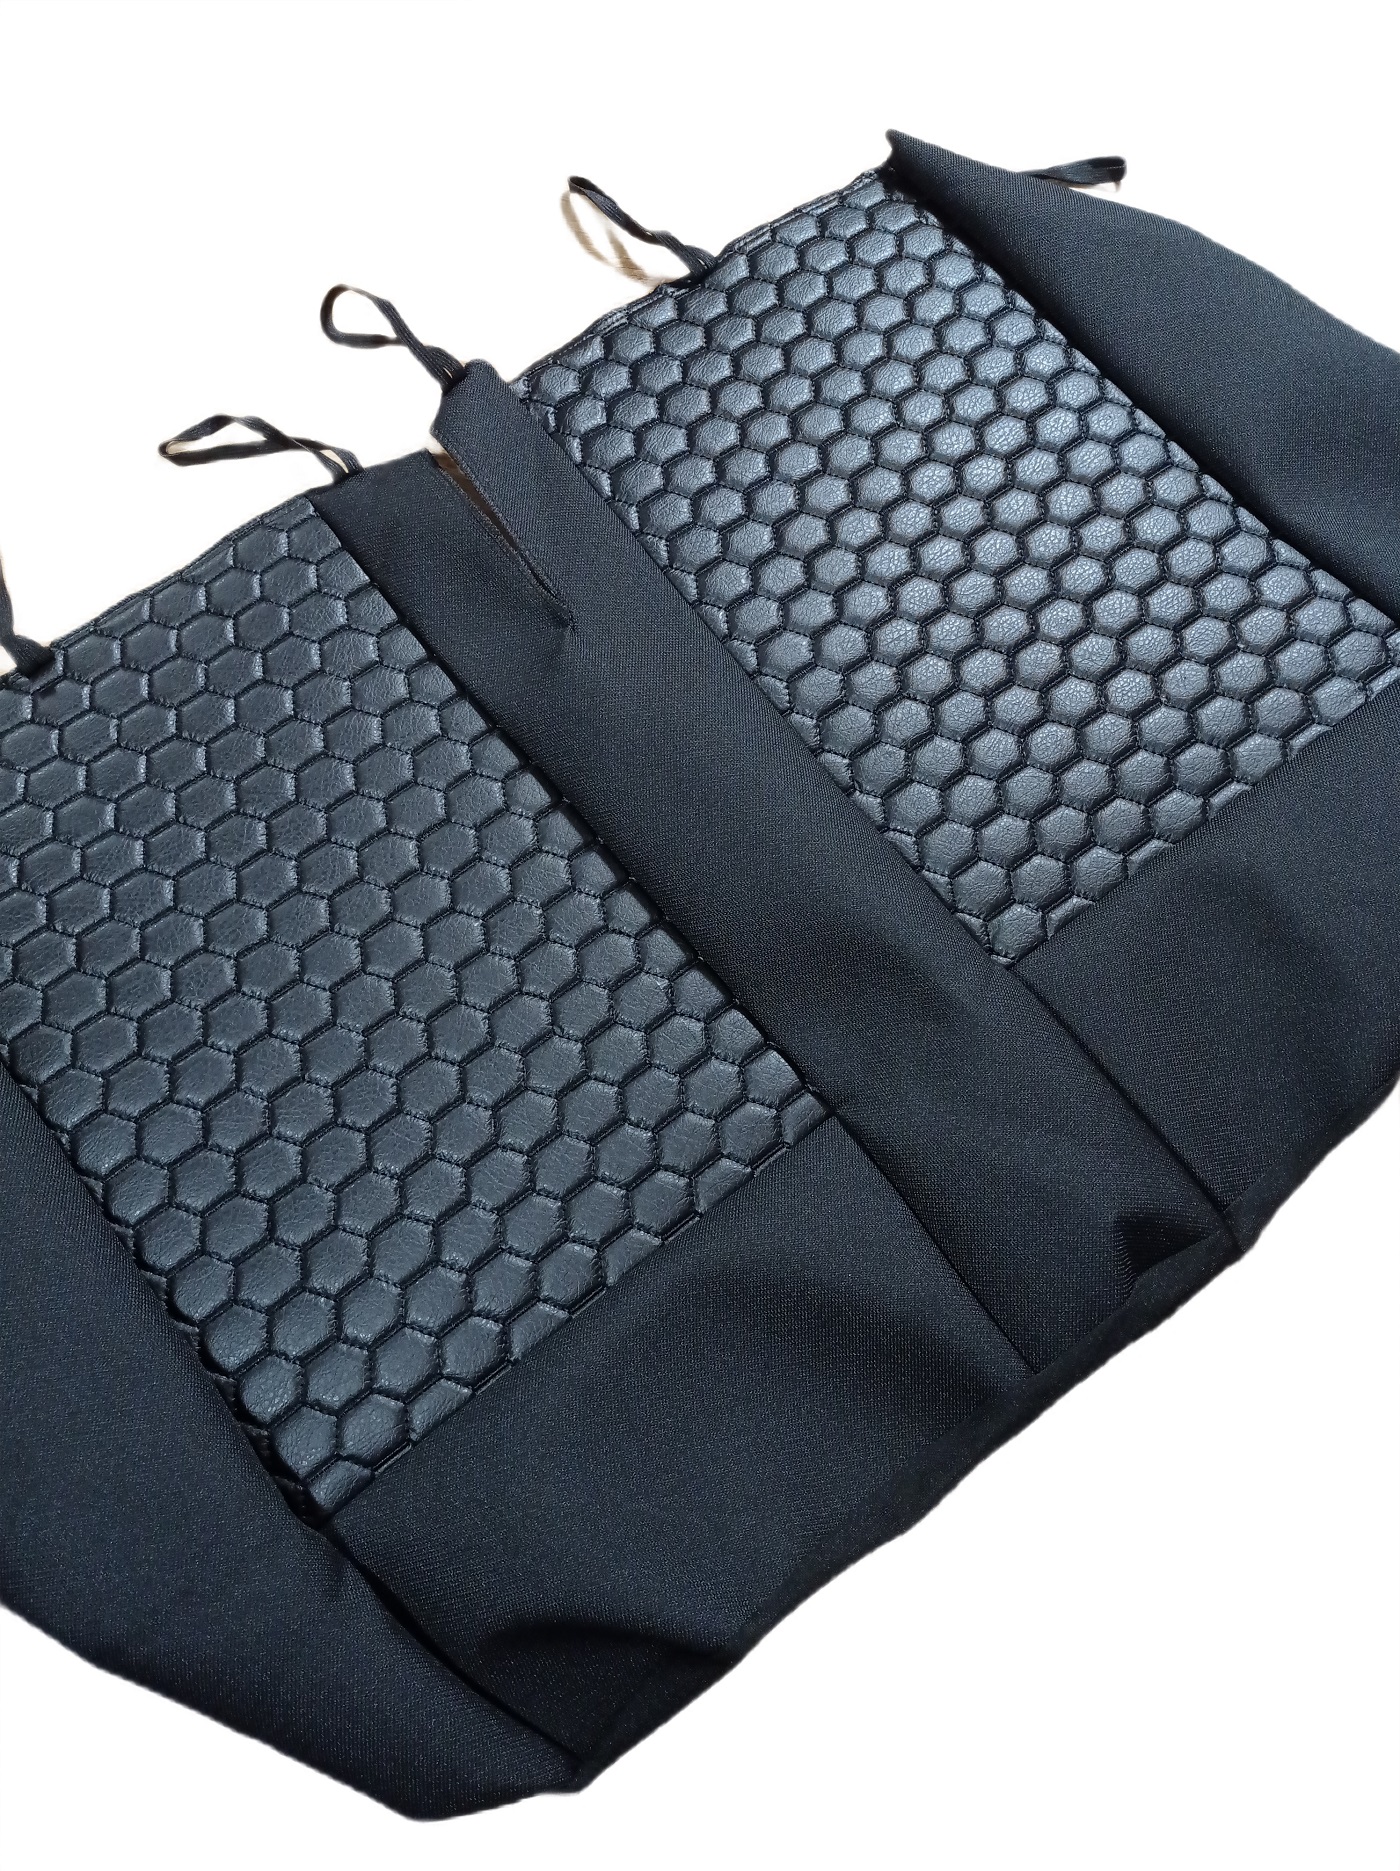 Seat covers for CITROEN JUMPER Van Black Leather